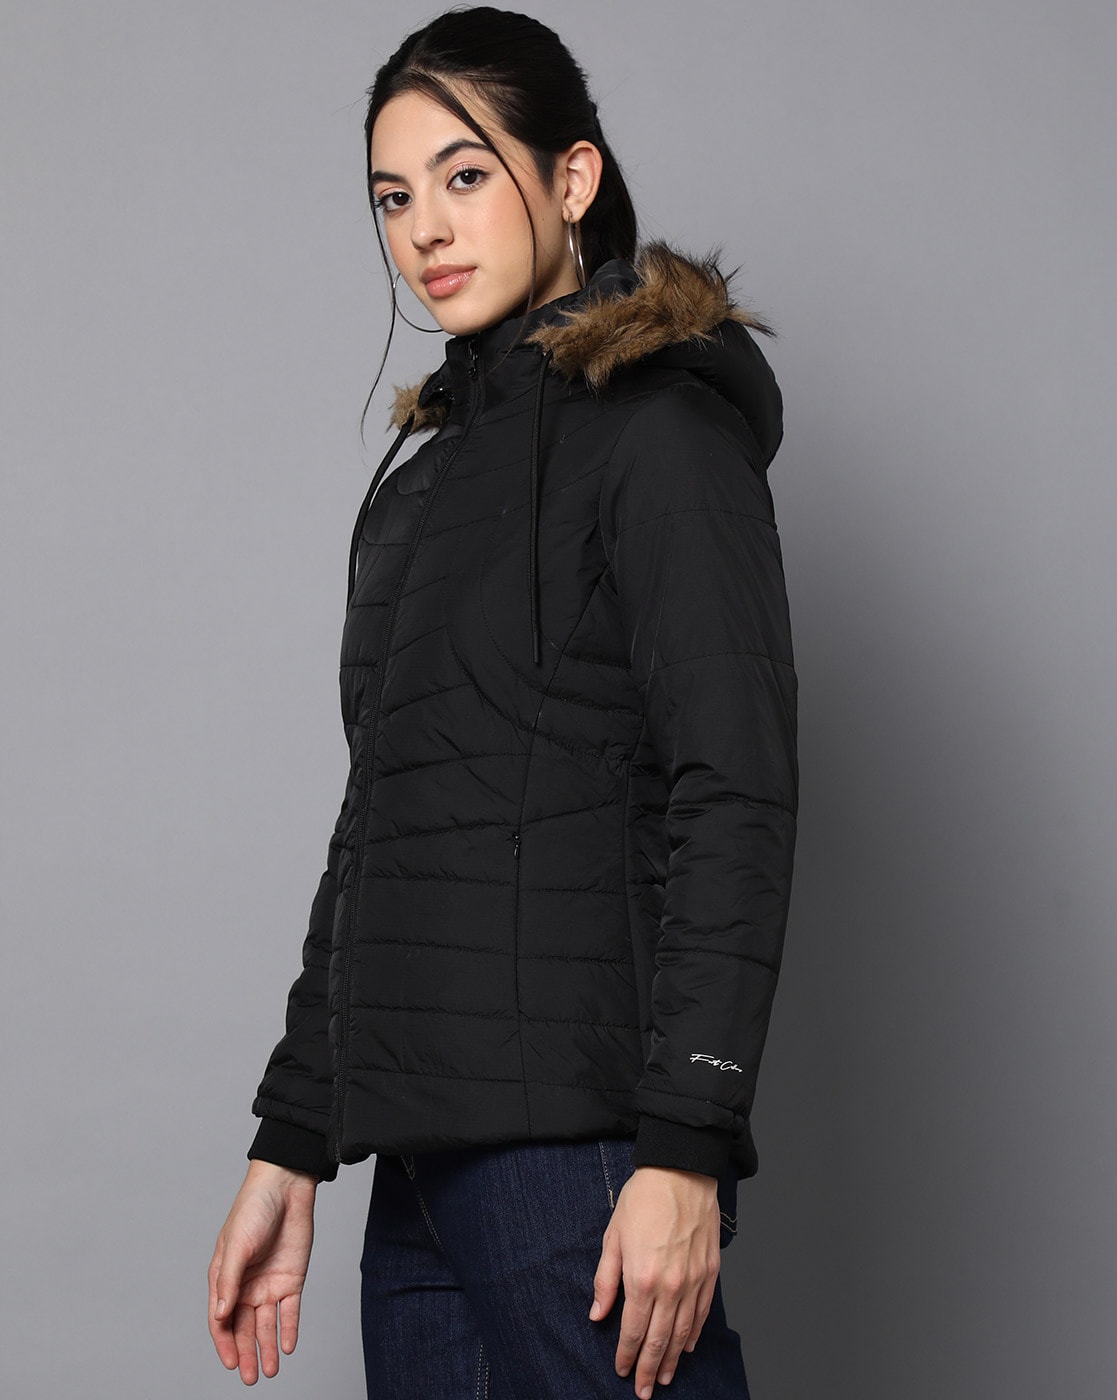 Women's Guess Puffer Jacket Coat Size Medium Black | eBay